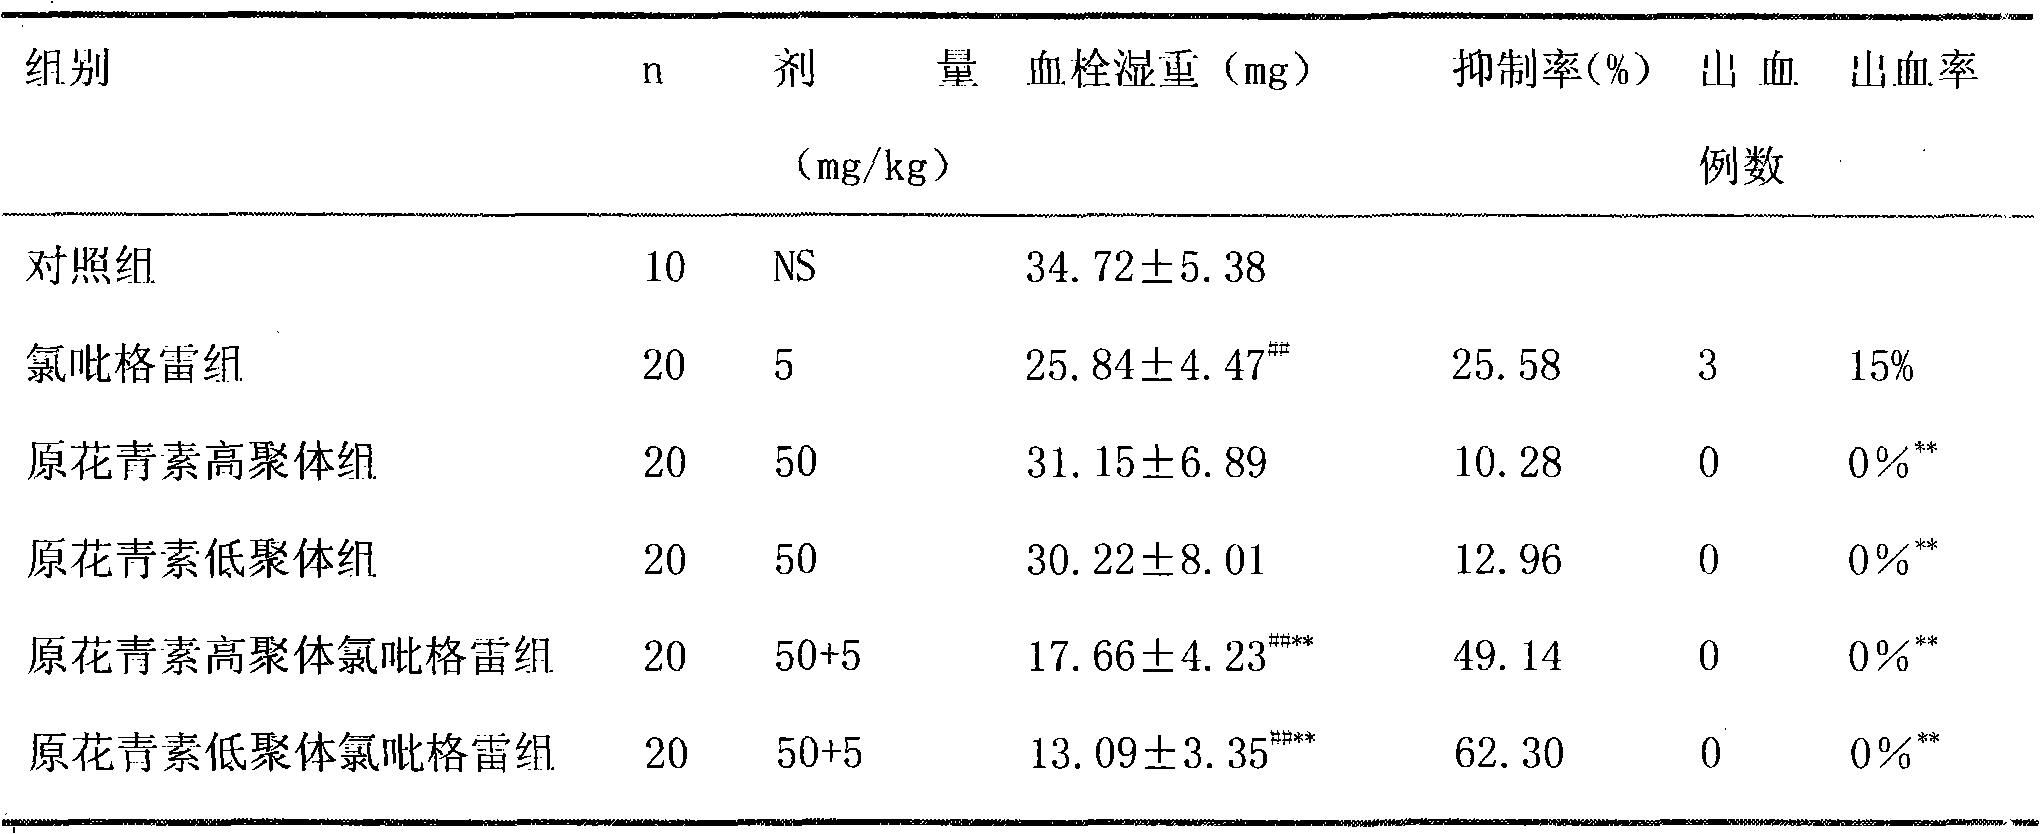 Pharmaceutical composition containing clopidogrel